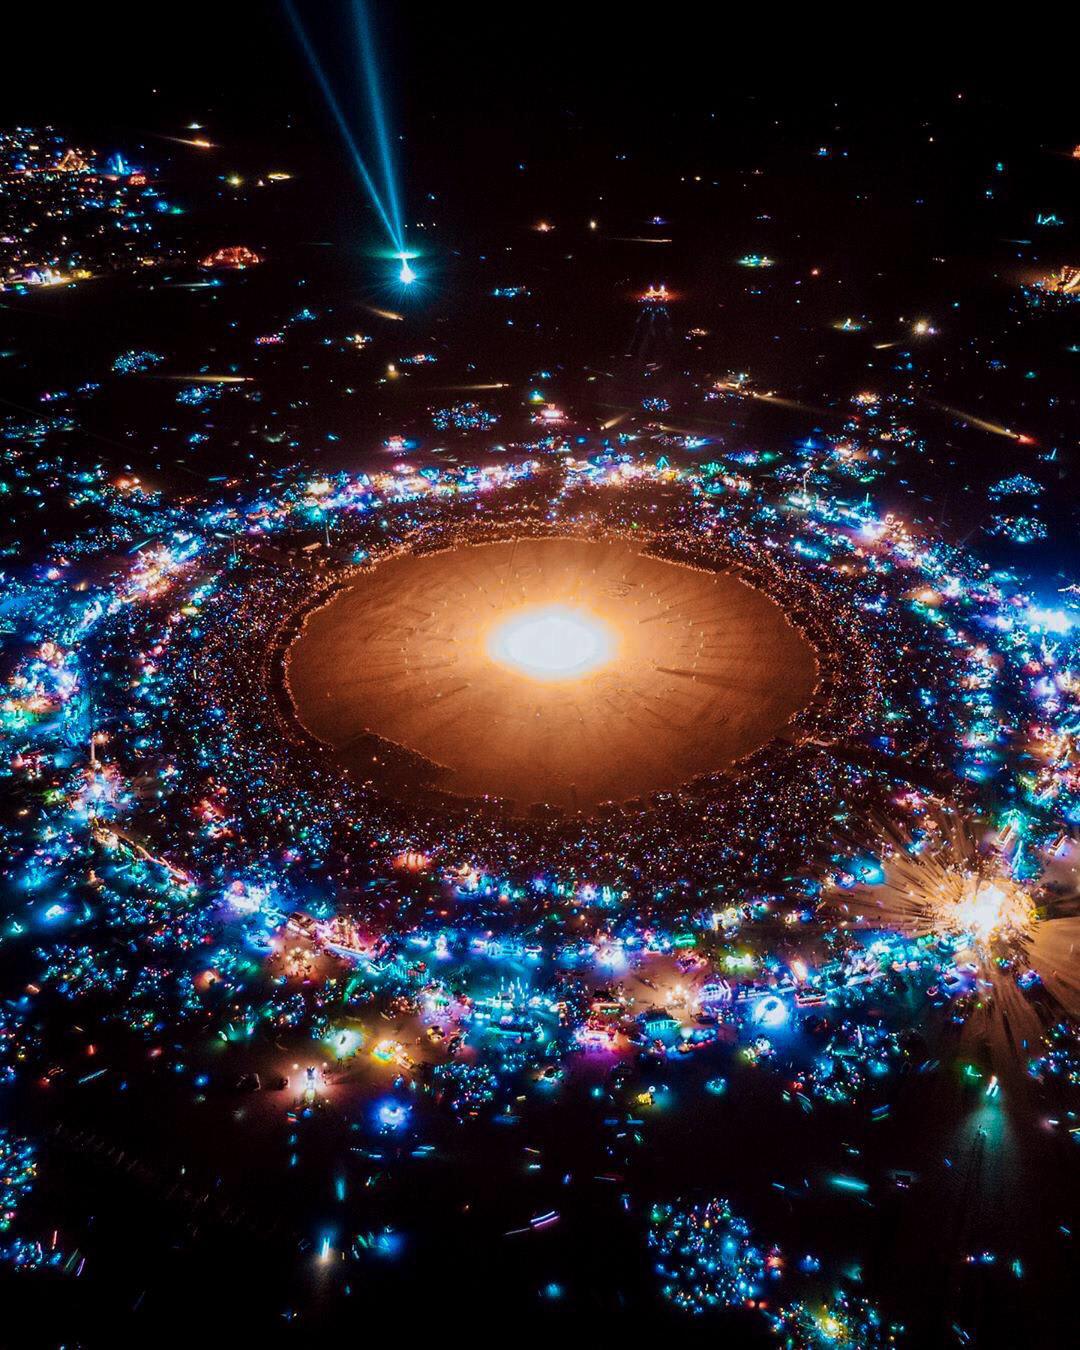 Burning Man is cosmically beautiful.